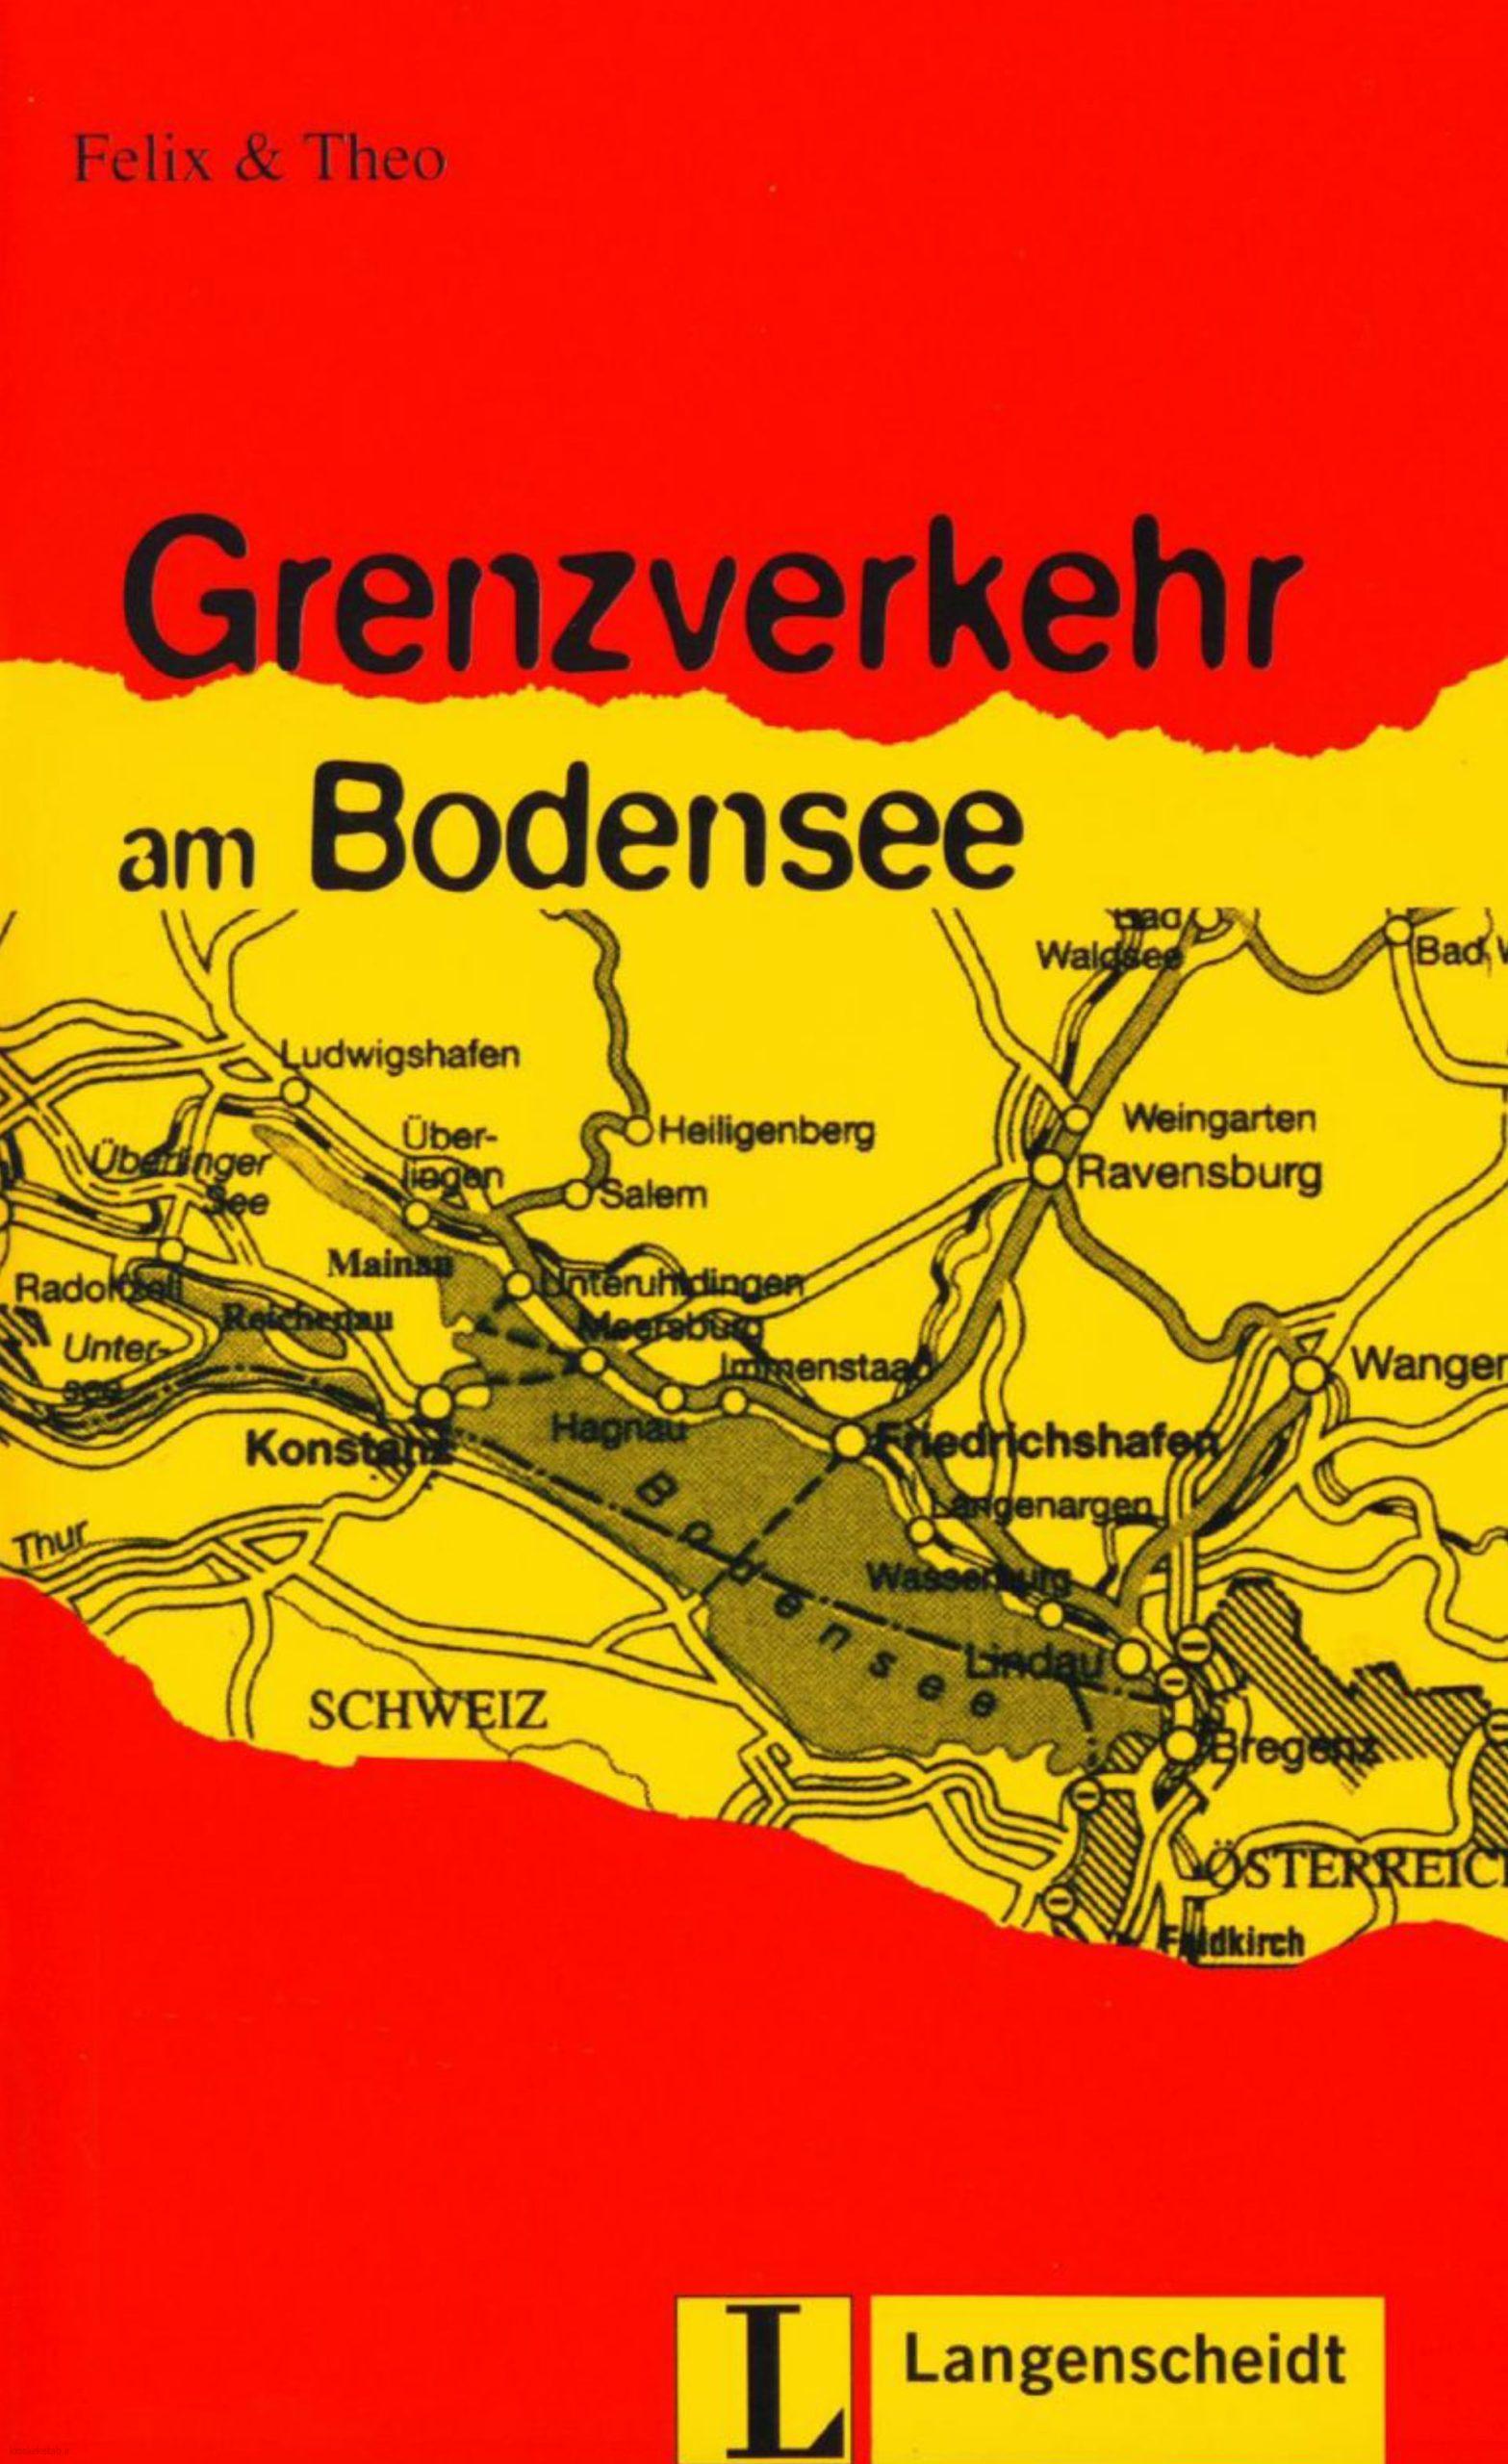 دانلود کتاب آلمانیfelix und theo grenzverkher am bodensee